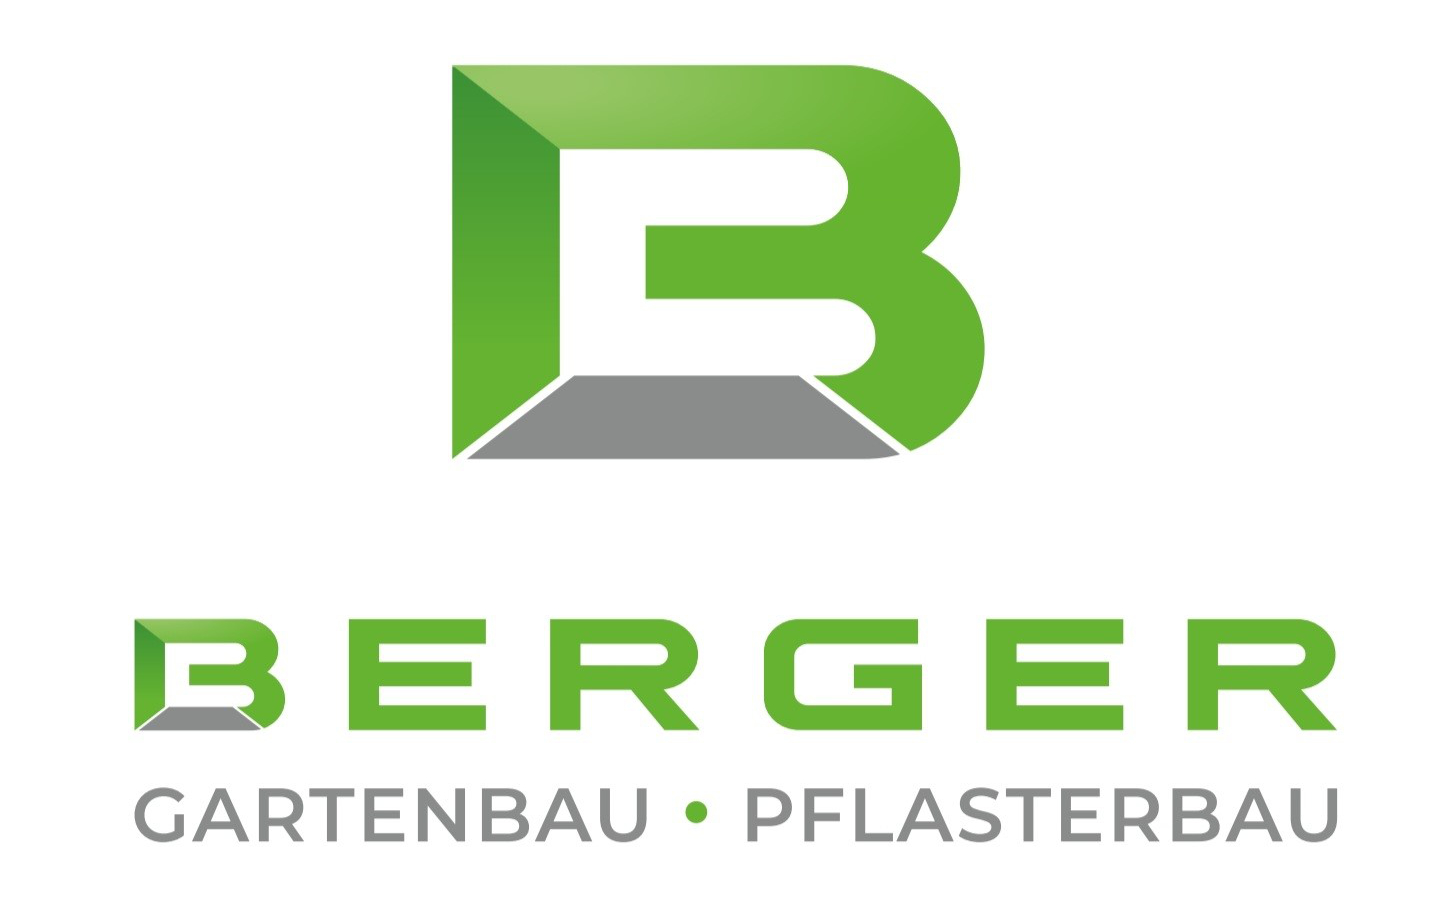 Berger Gartenbau & Pflasterbau